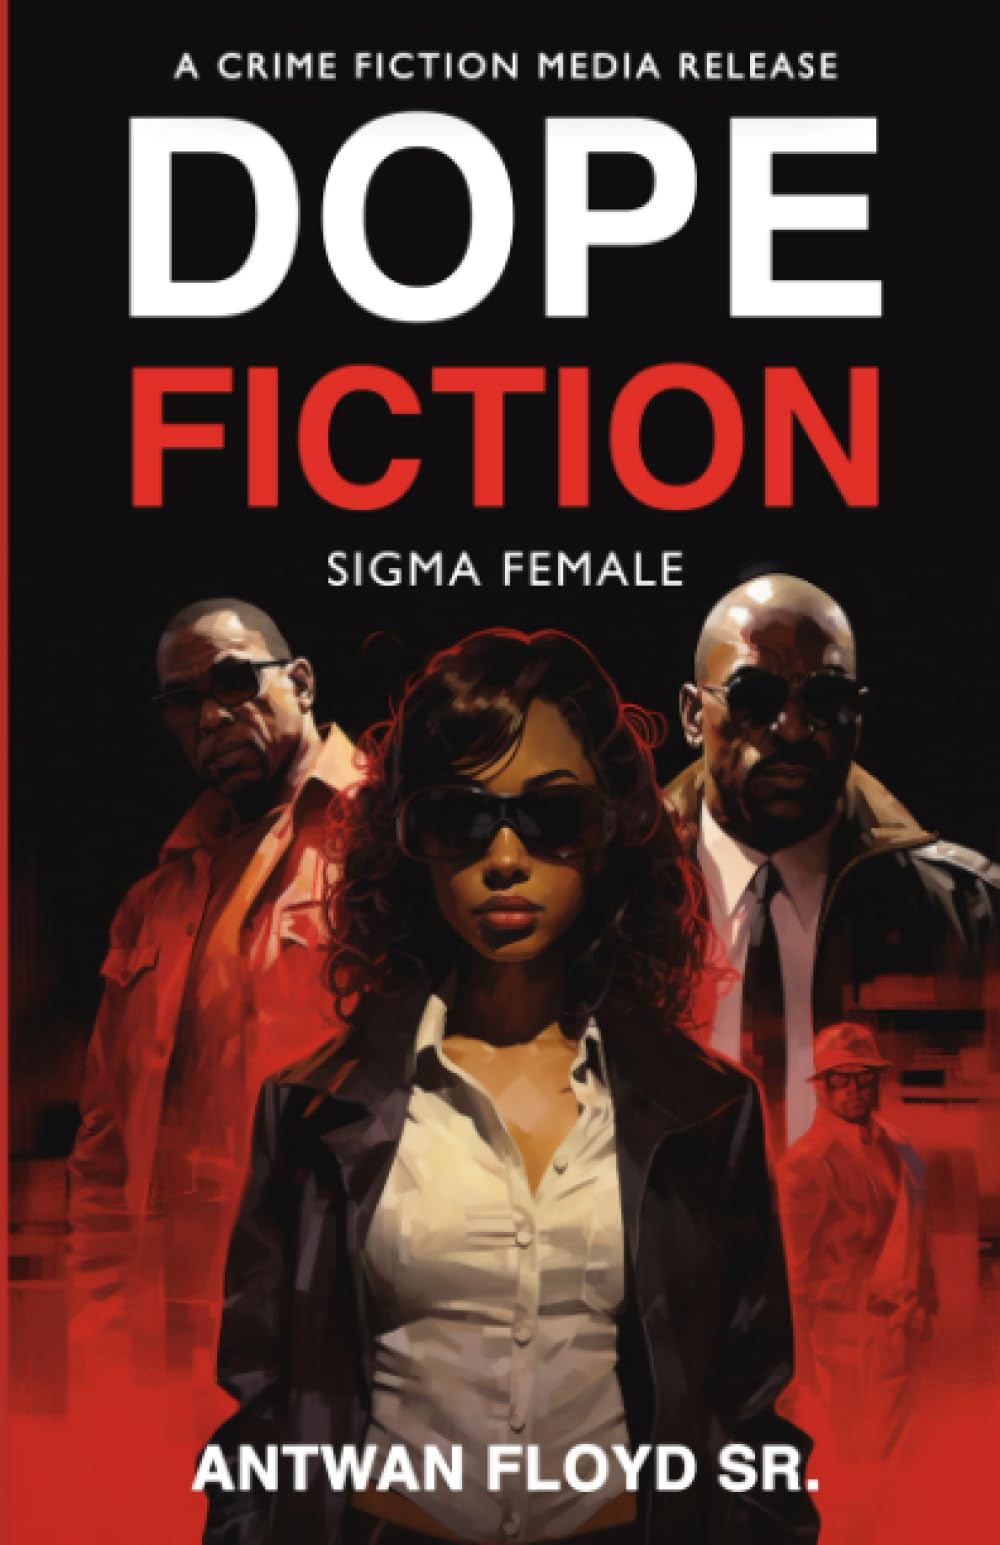 Dope Fiction "Sigma Female"